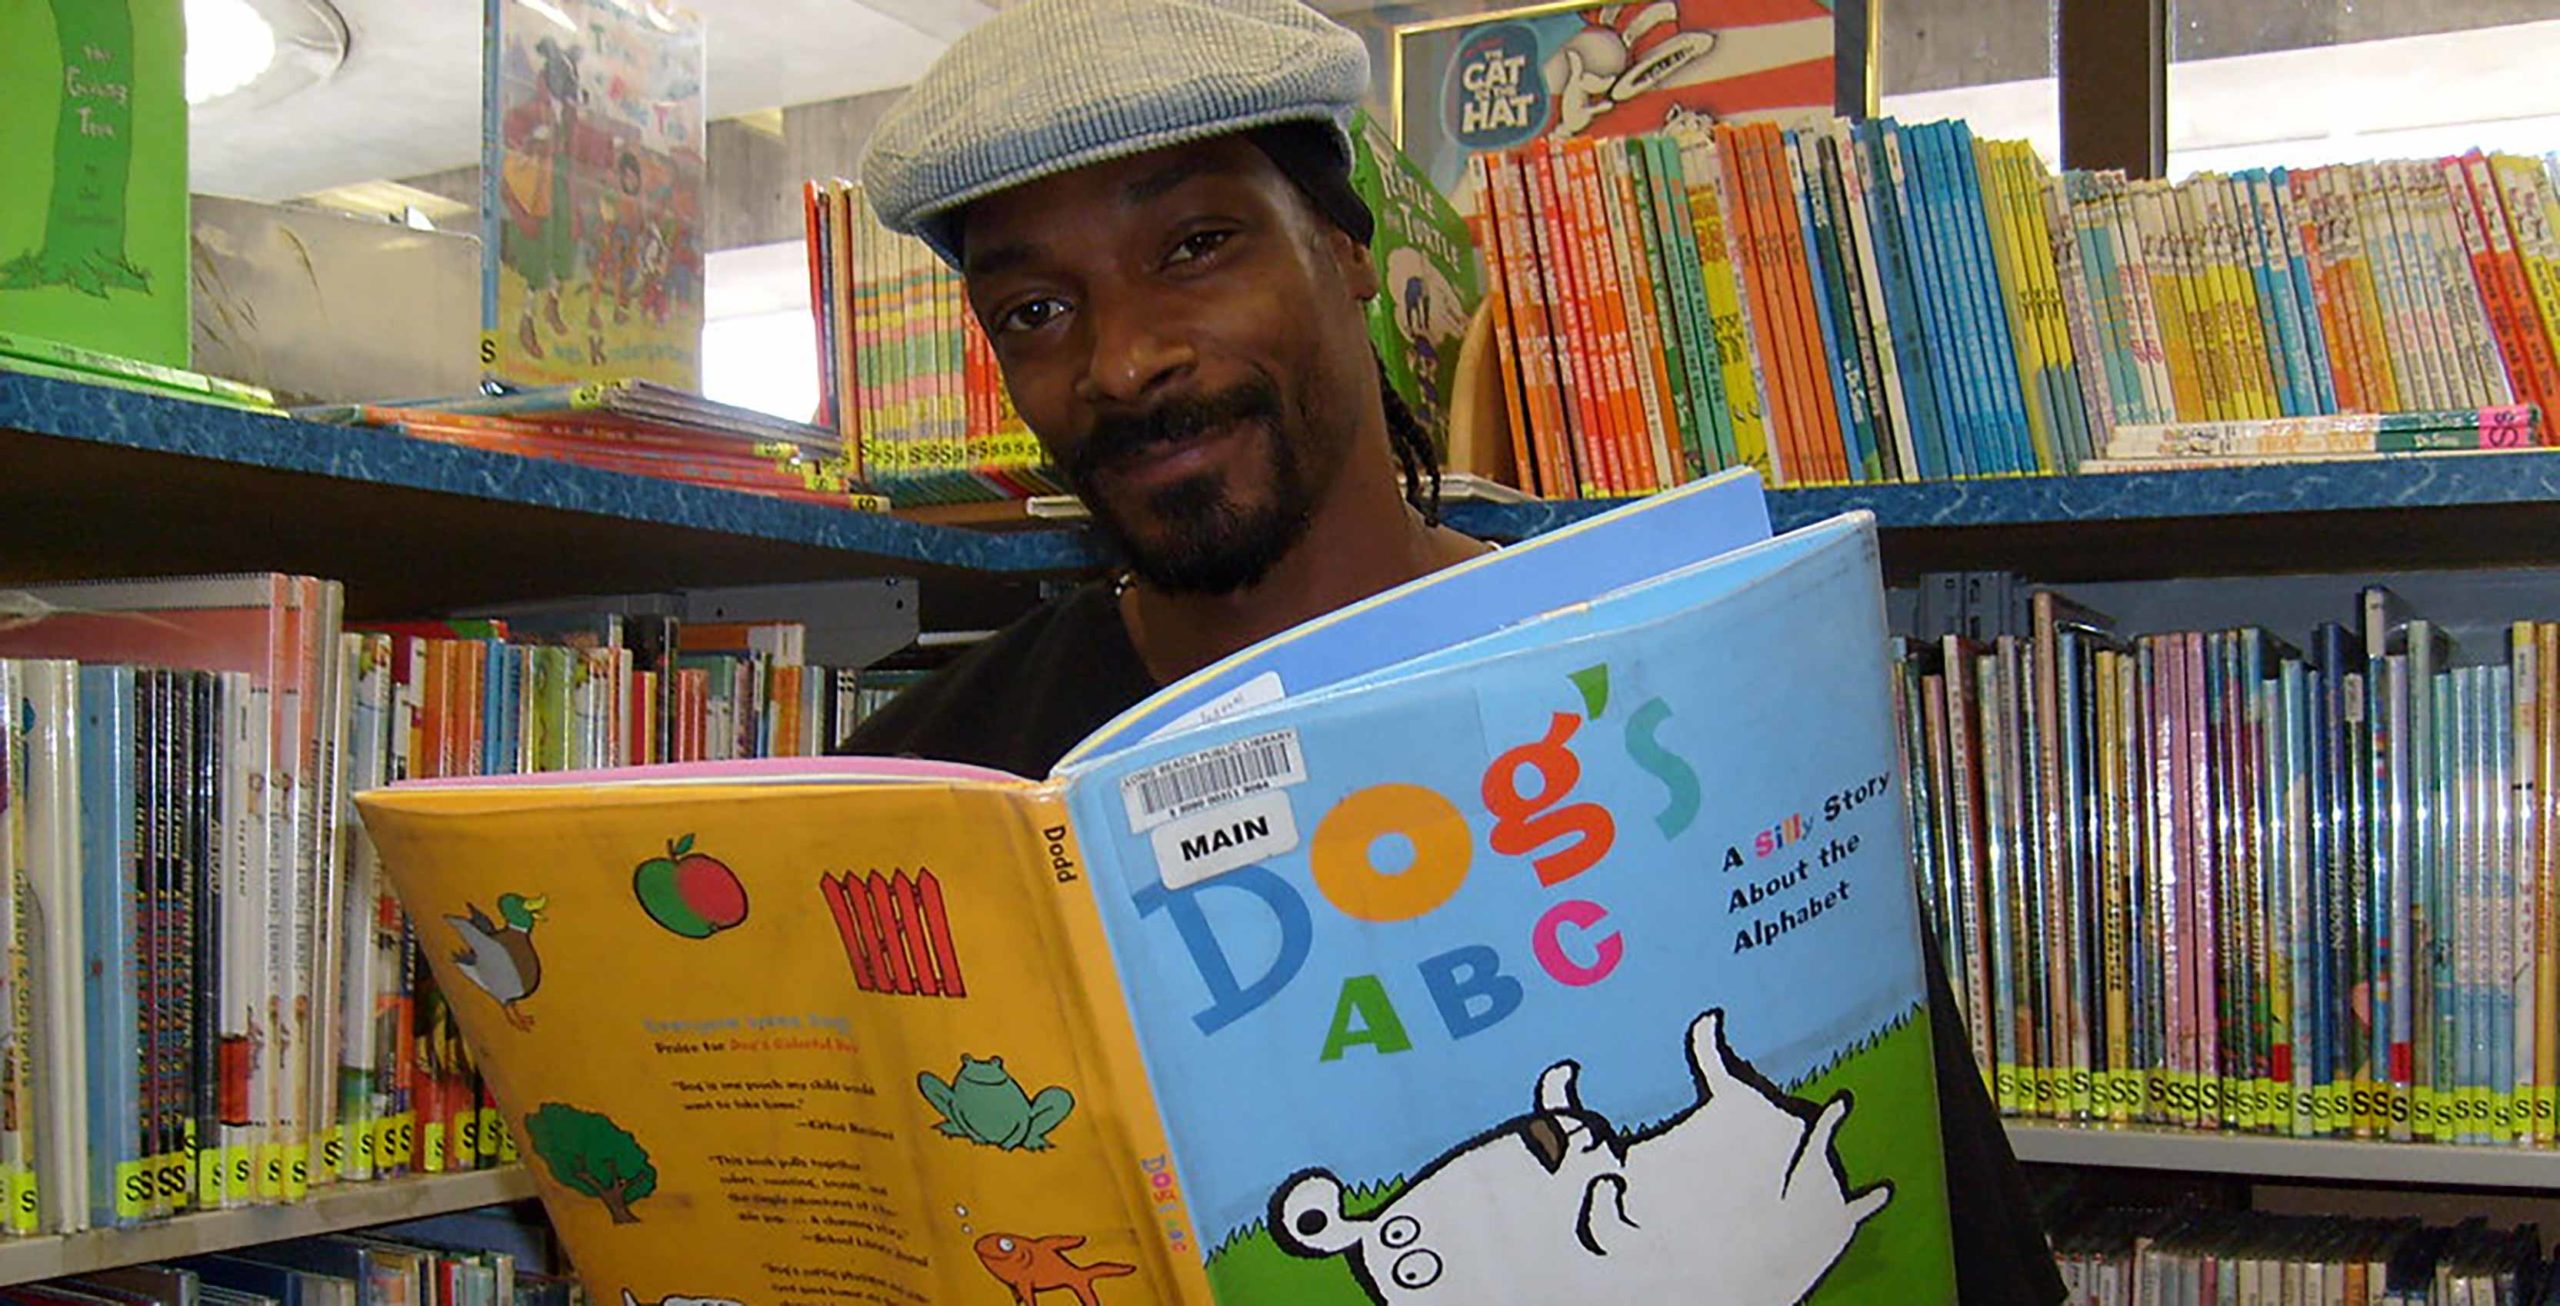 Snoop Dogg reads